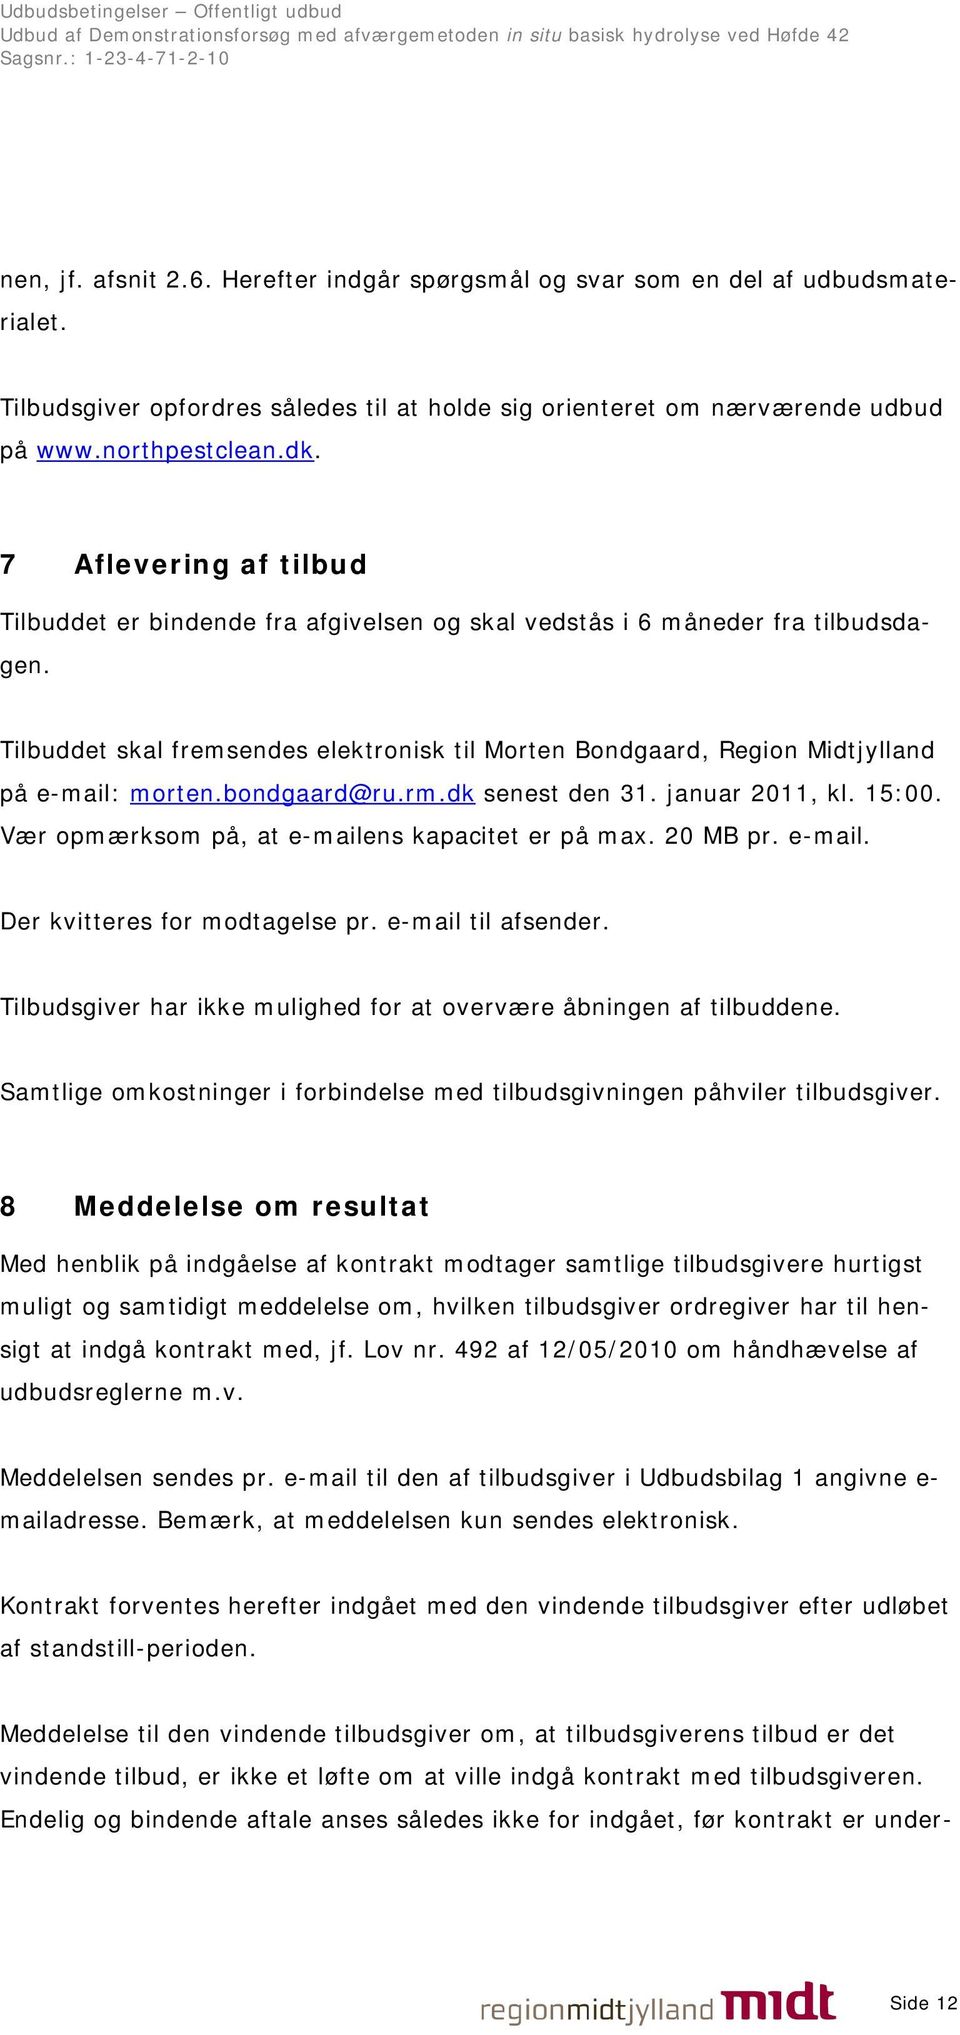 Tilbuddet skal fremsendes elektronisk til Morten Bondgaard, Region Midtjylland på e-mail: morten.bondgaard@ru.rm.dk senest den 31. januar 2011, kl. 15:00.